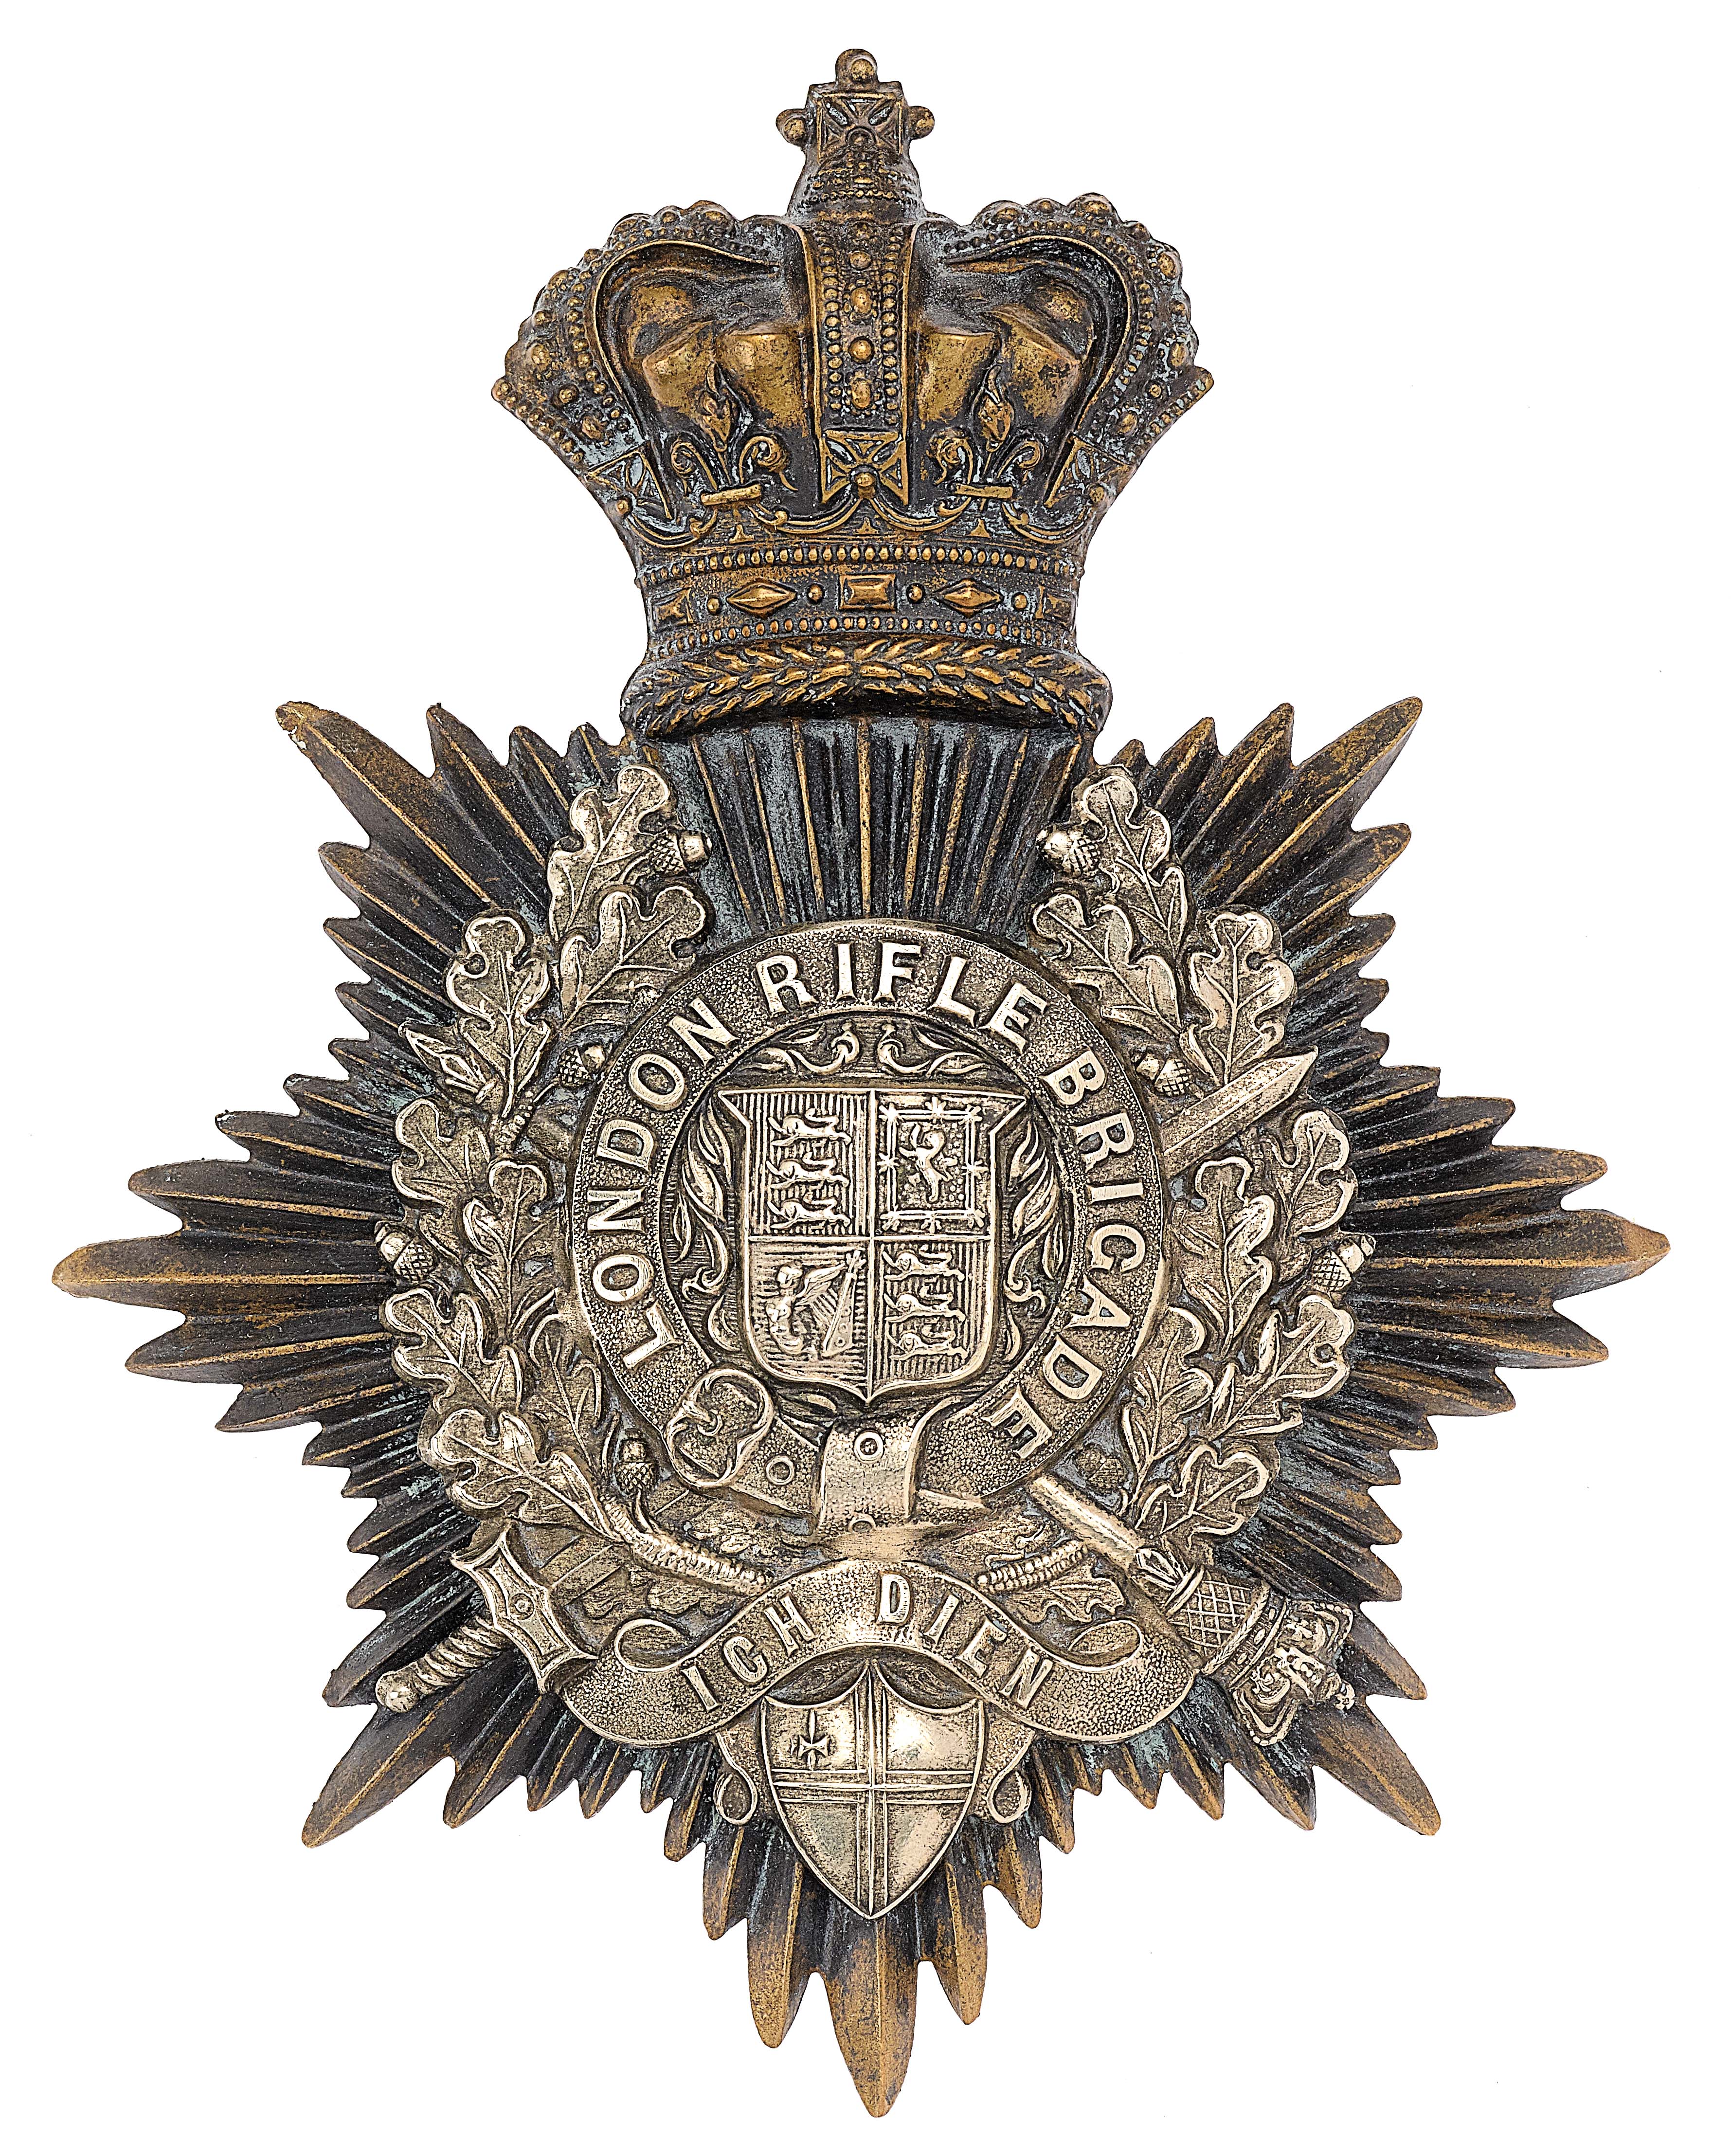 1st (City of London Volunteer Rifle Brigade) Victorian shako plate circa 1859-1901